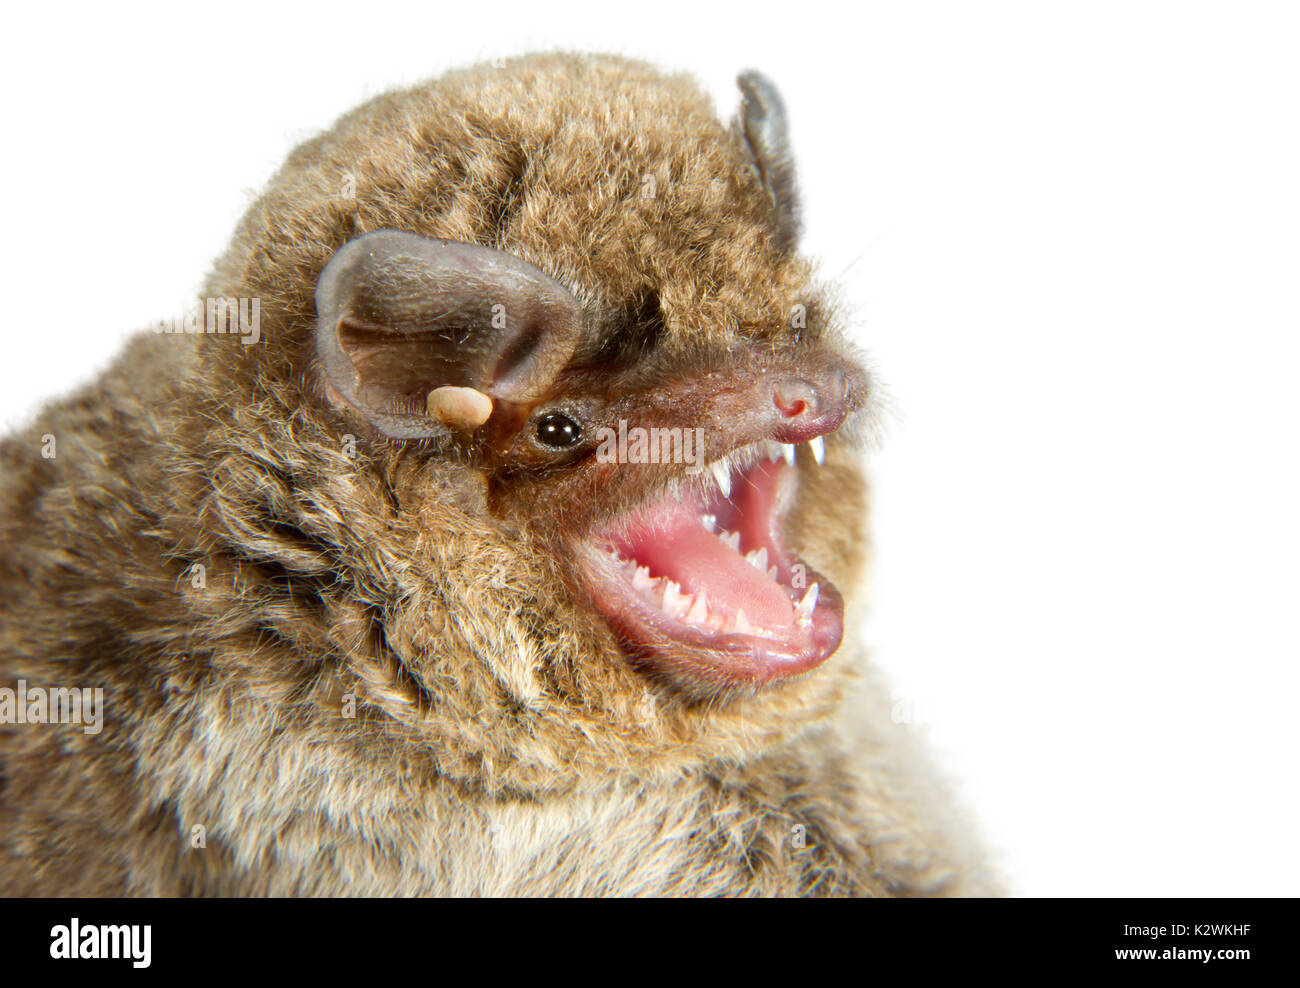 Schreiber's long-winged bat (Minioptyerus schreibersii) portrait, isolated on white background. Stock Photo